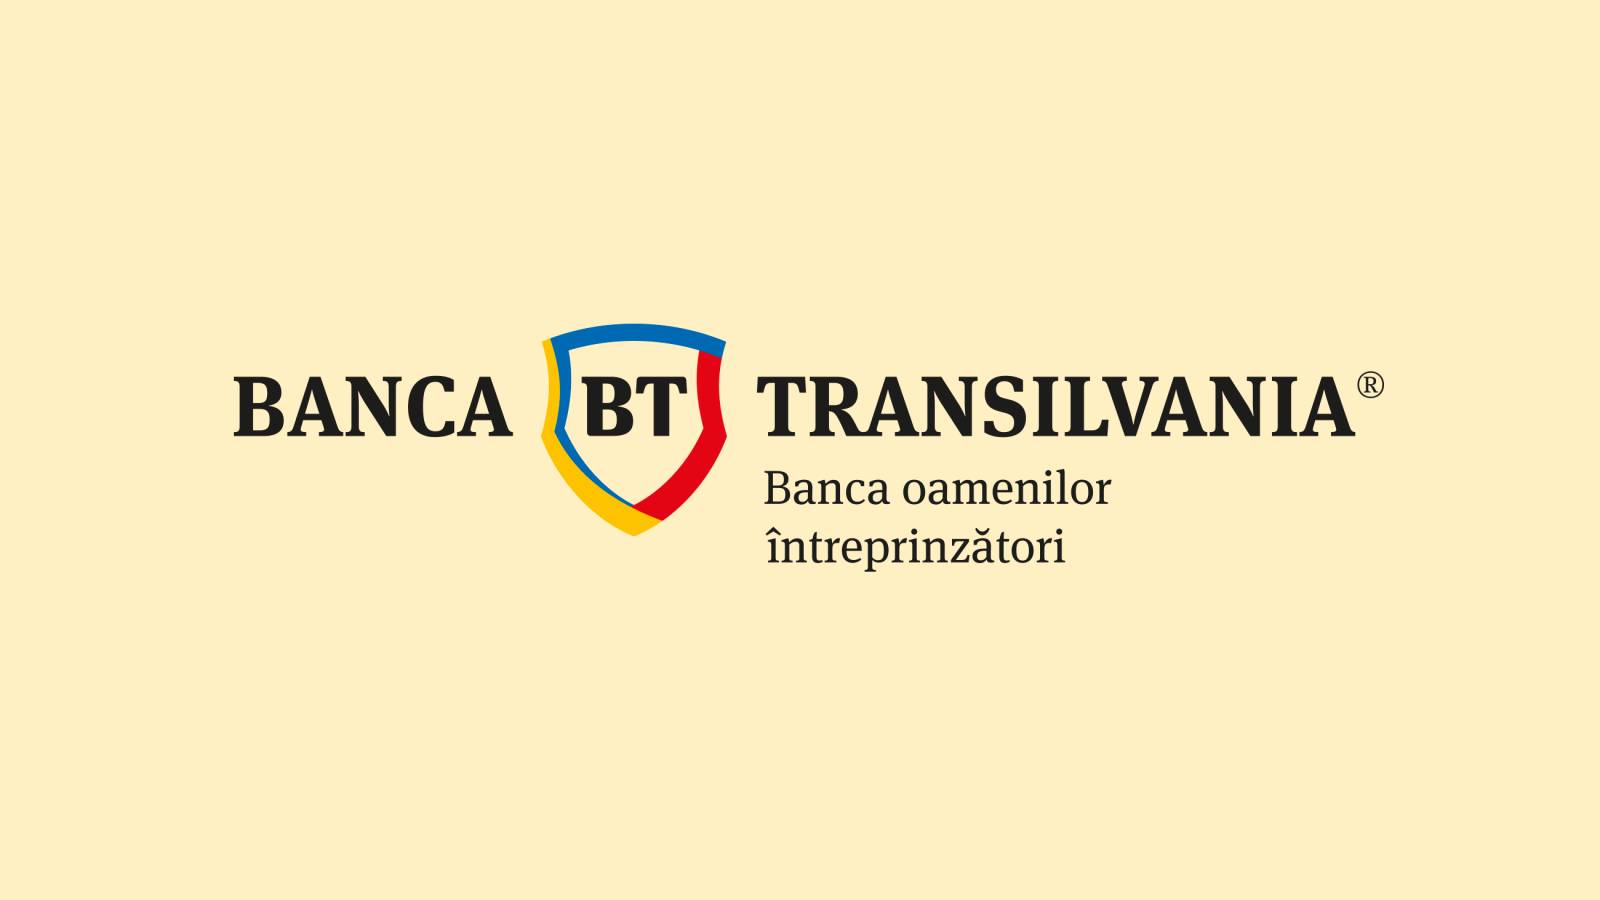 le message BANCA Transilvania payer en ligne avertissement